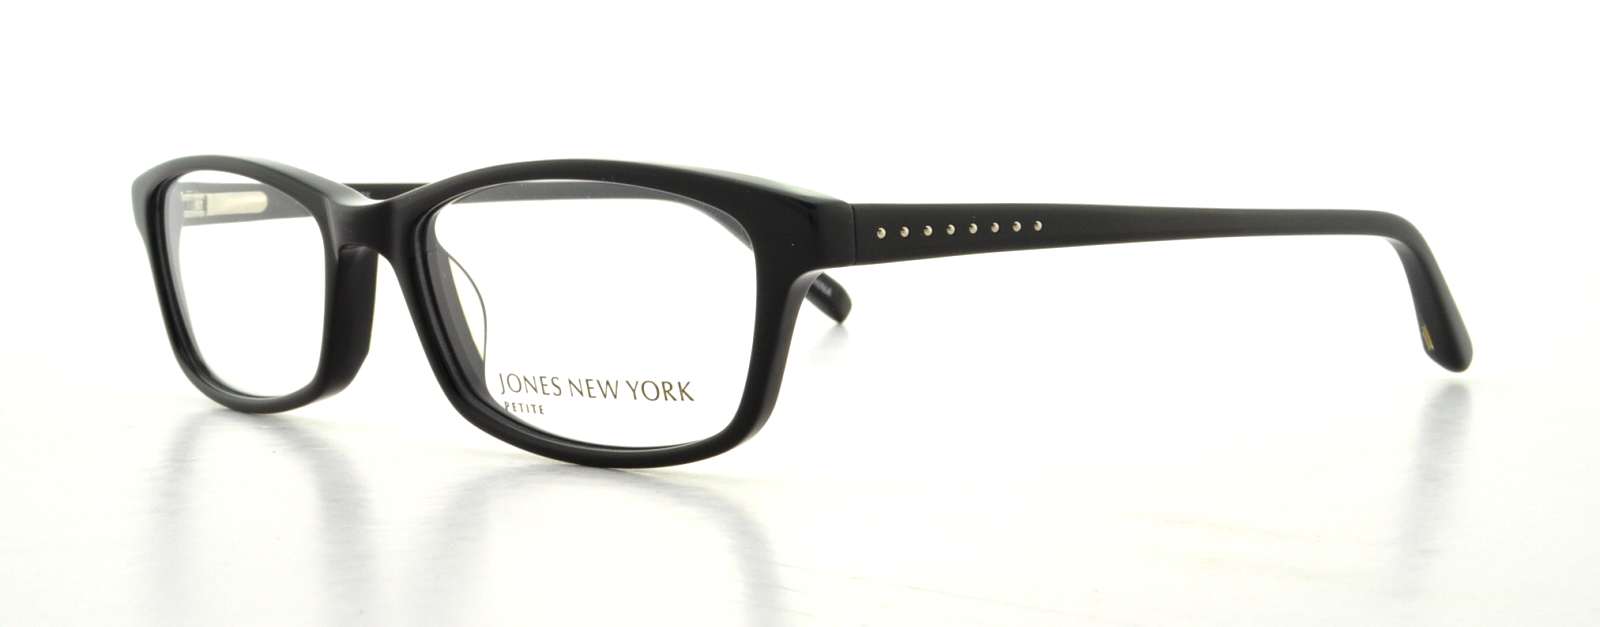 Picture of Jones New York Eyeglasses J211